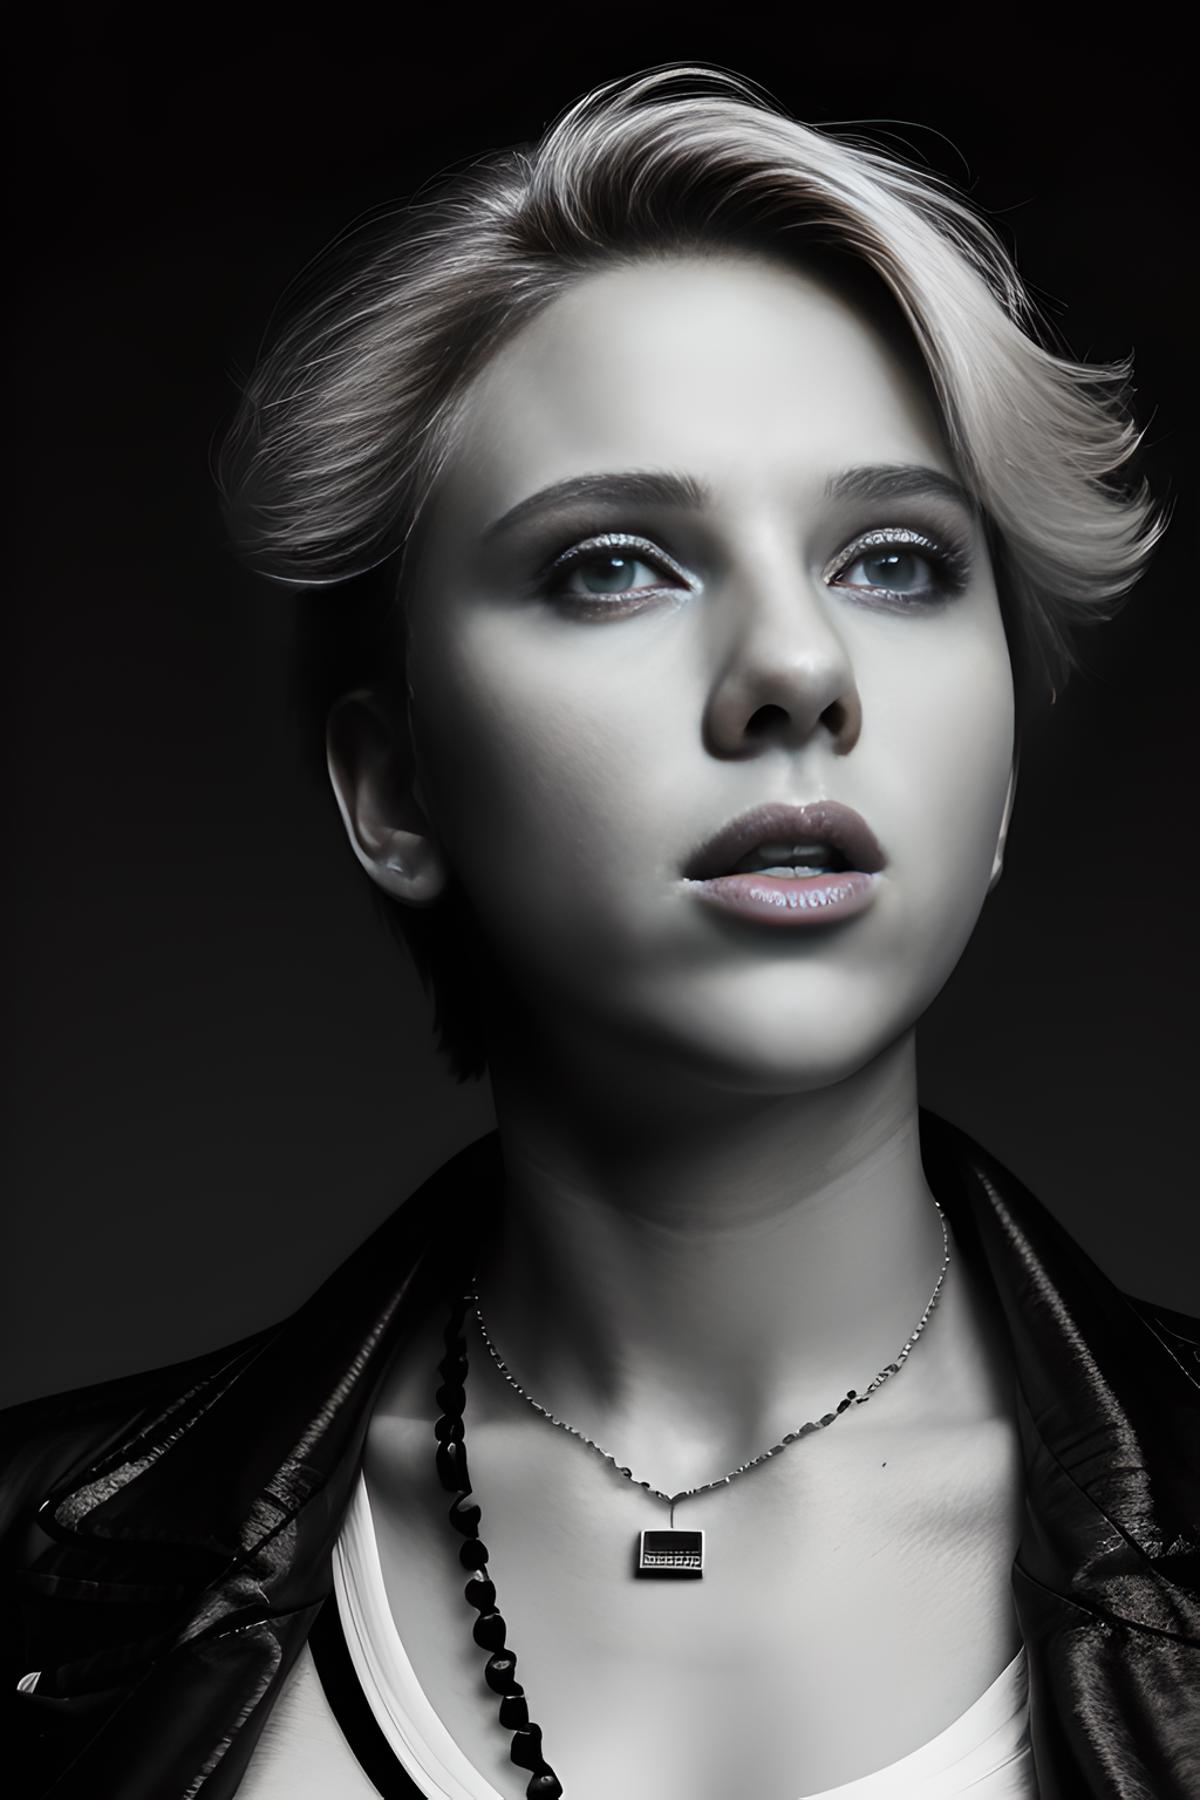 Scarlett Johansson image by dbst17